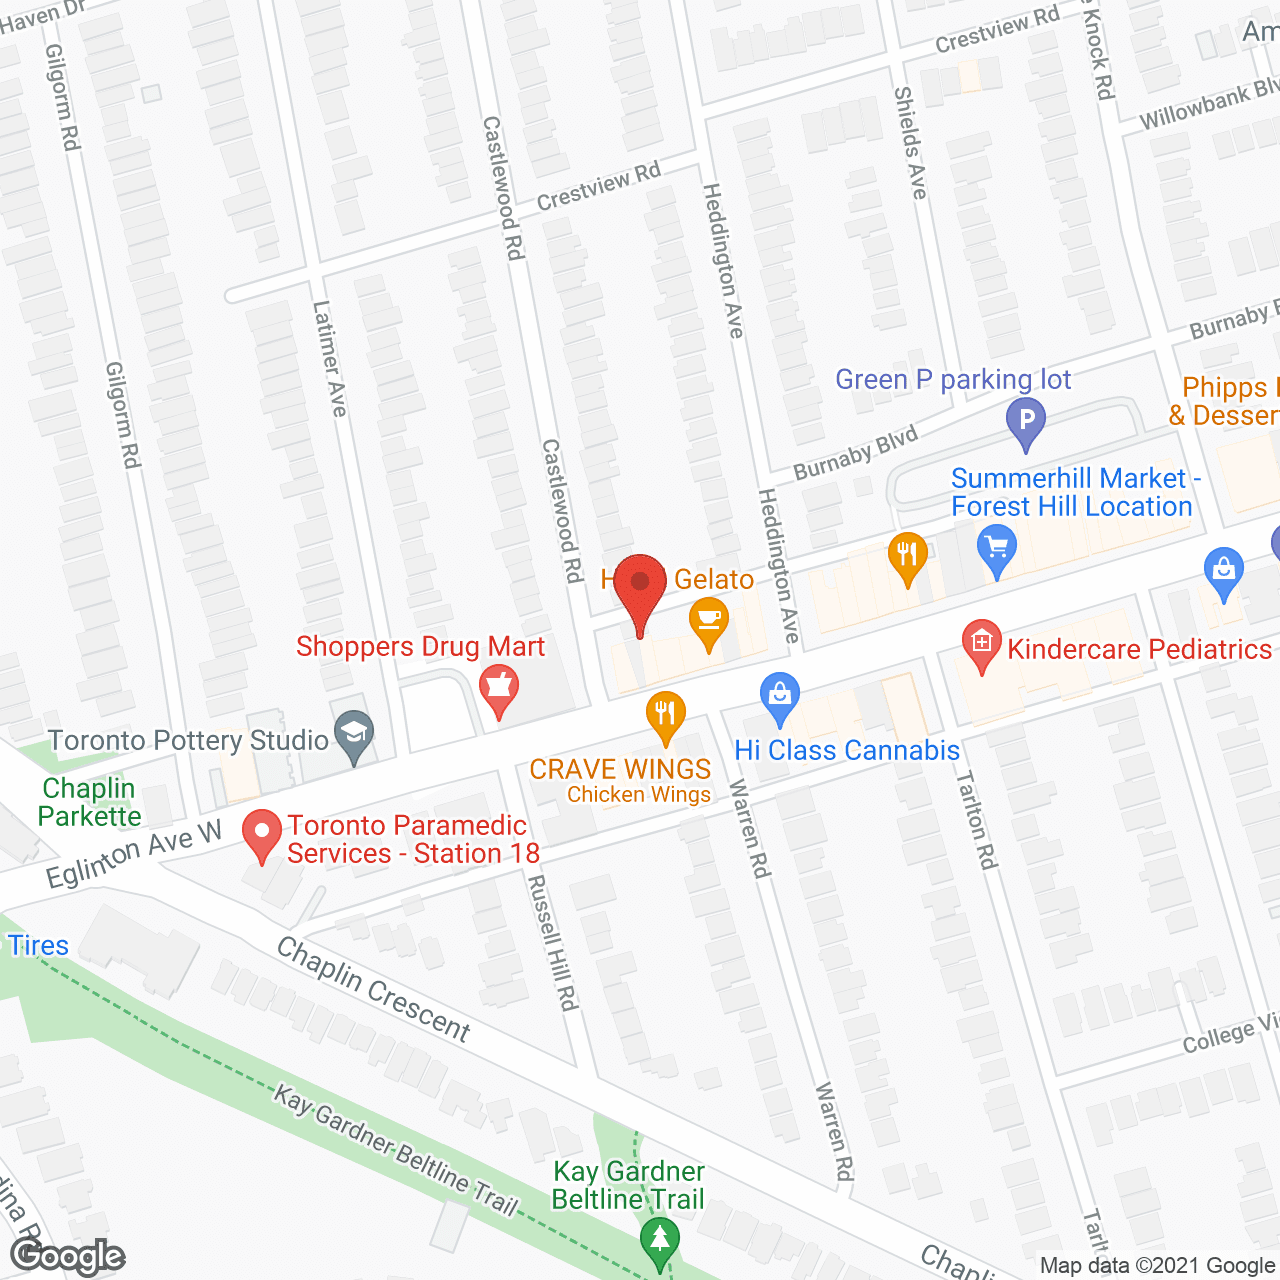 Caregiver Services Ltd - Toronto, ON in google map